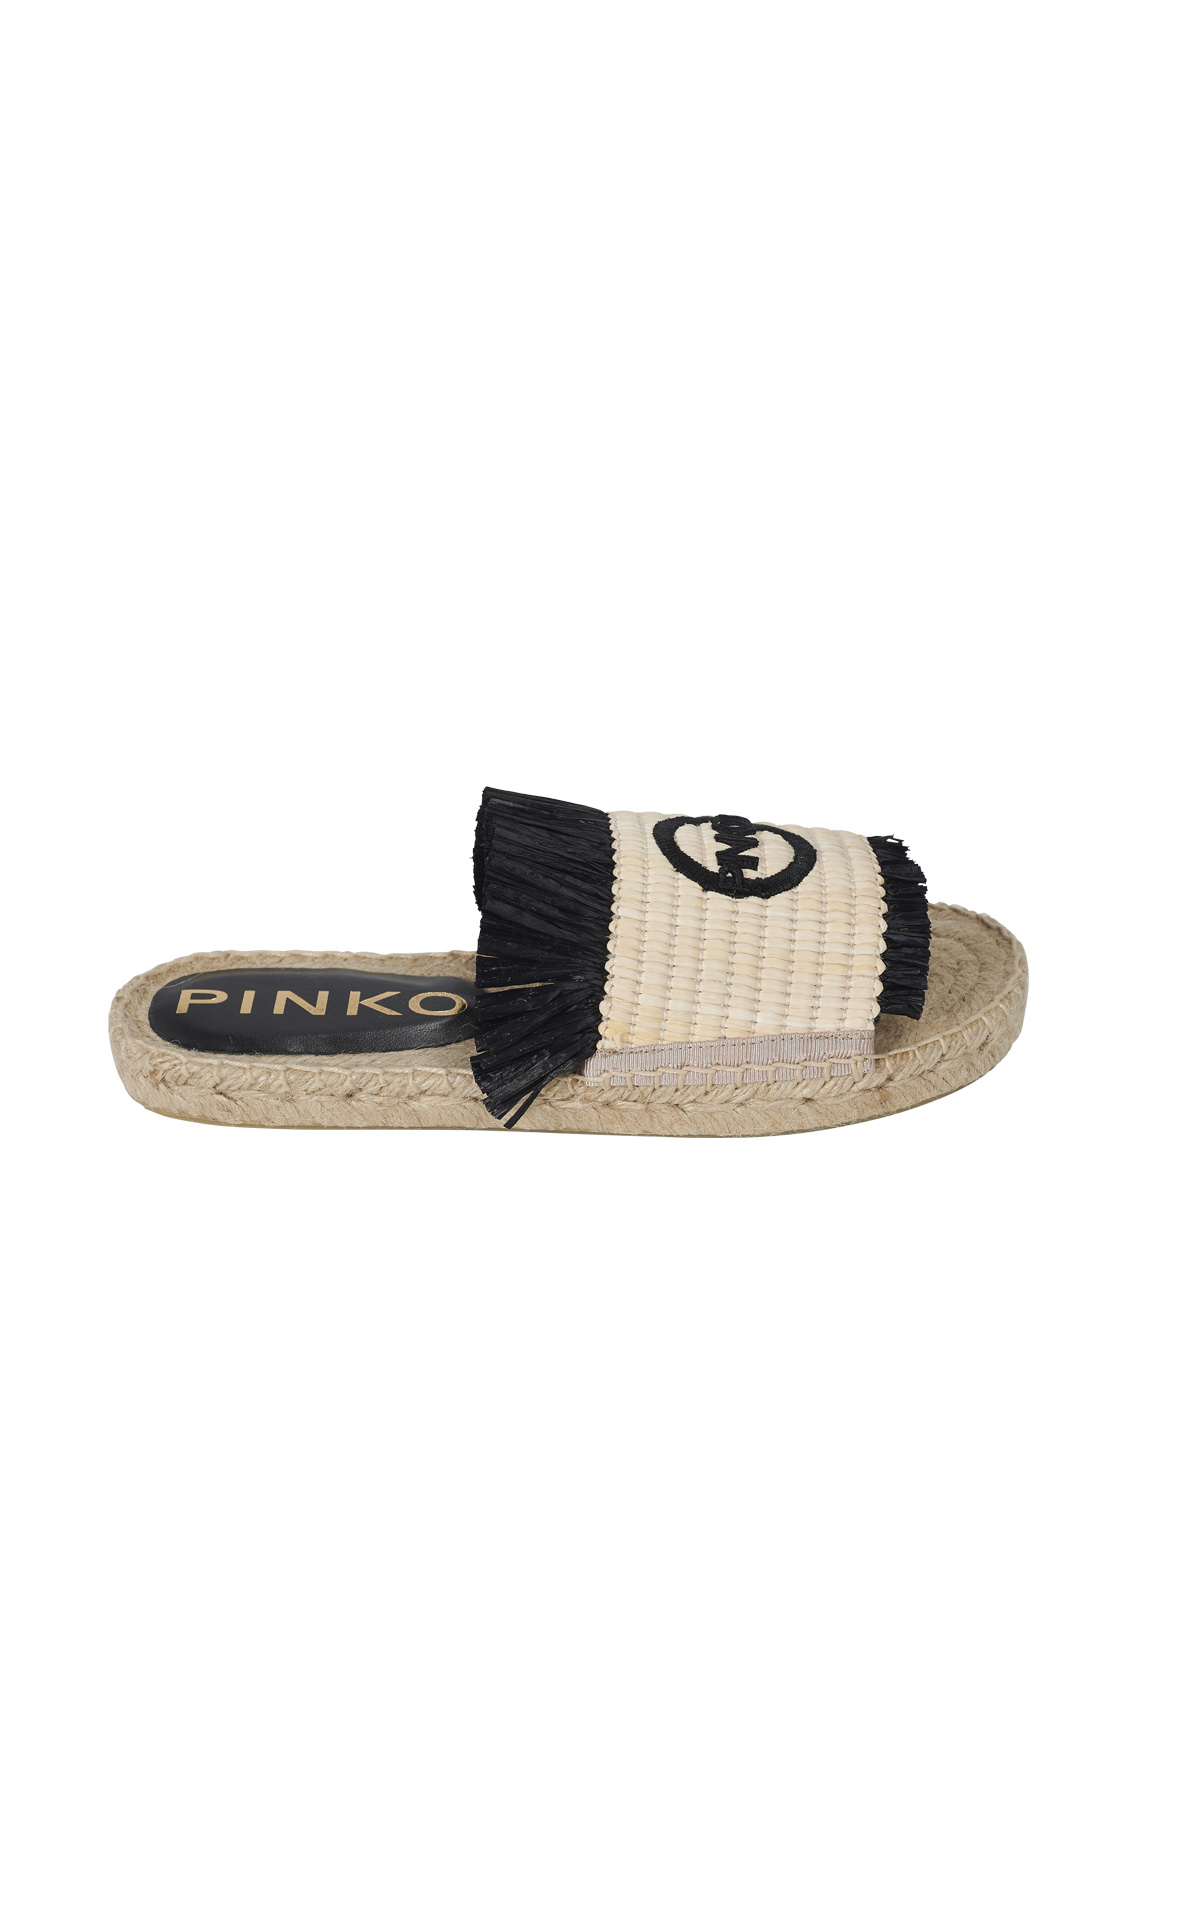 Sandalia negra y beige Pinko